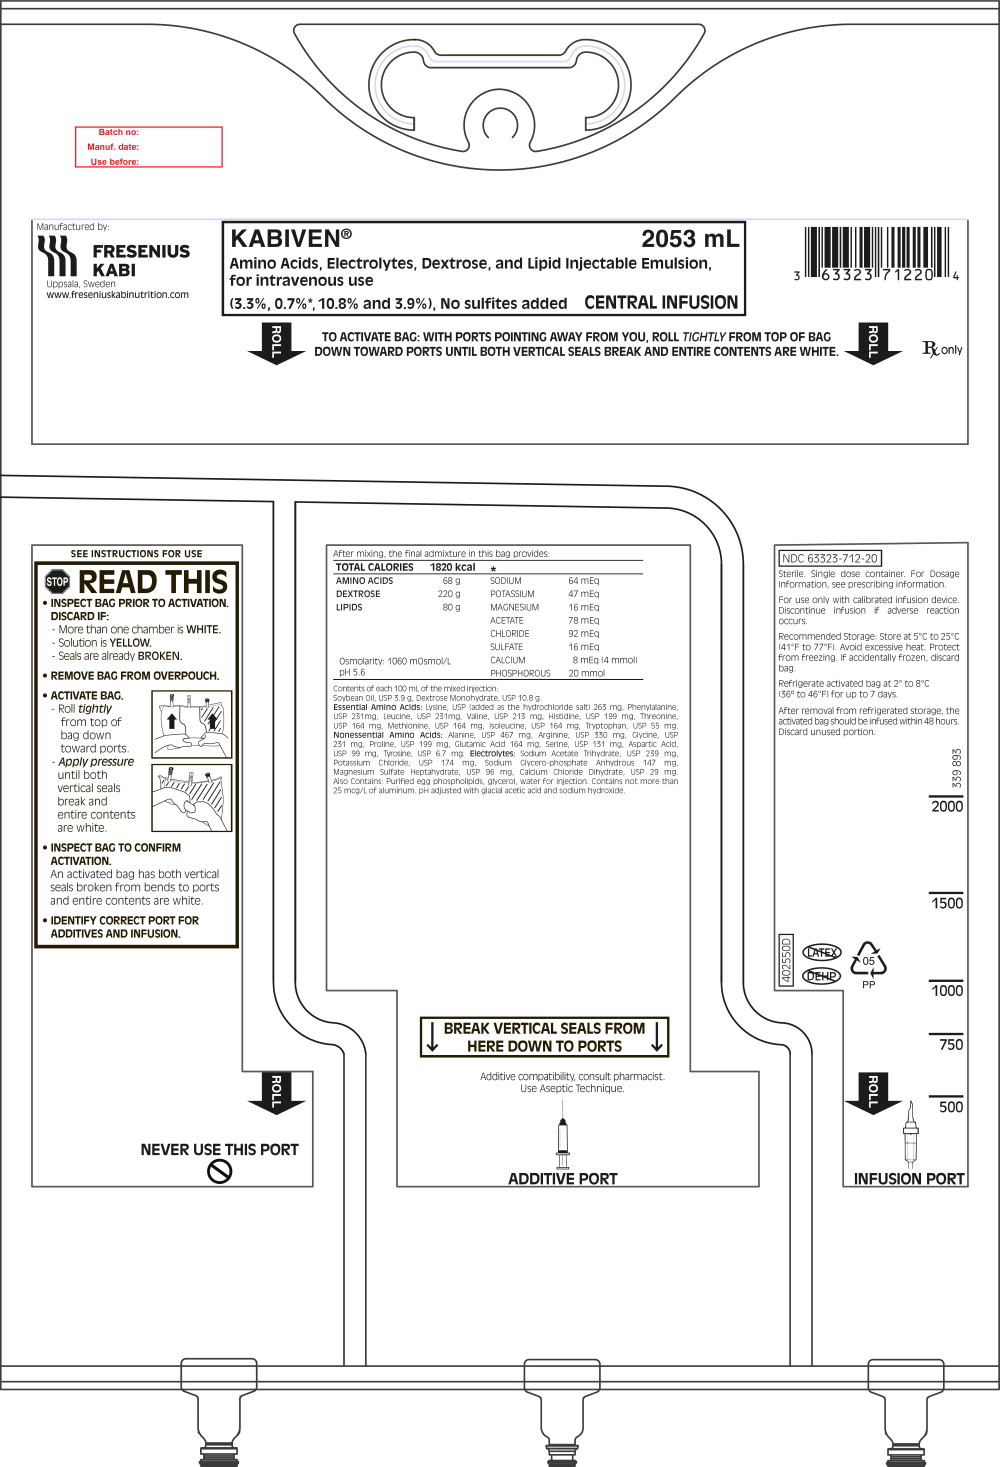 PACKAGE LABEL - PRINCIPAL DISPLAY PANEL - KABIVEN® 2053 mL Bag Label
